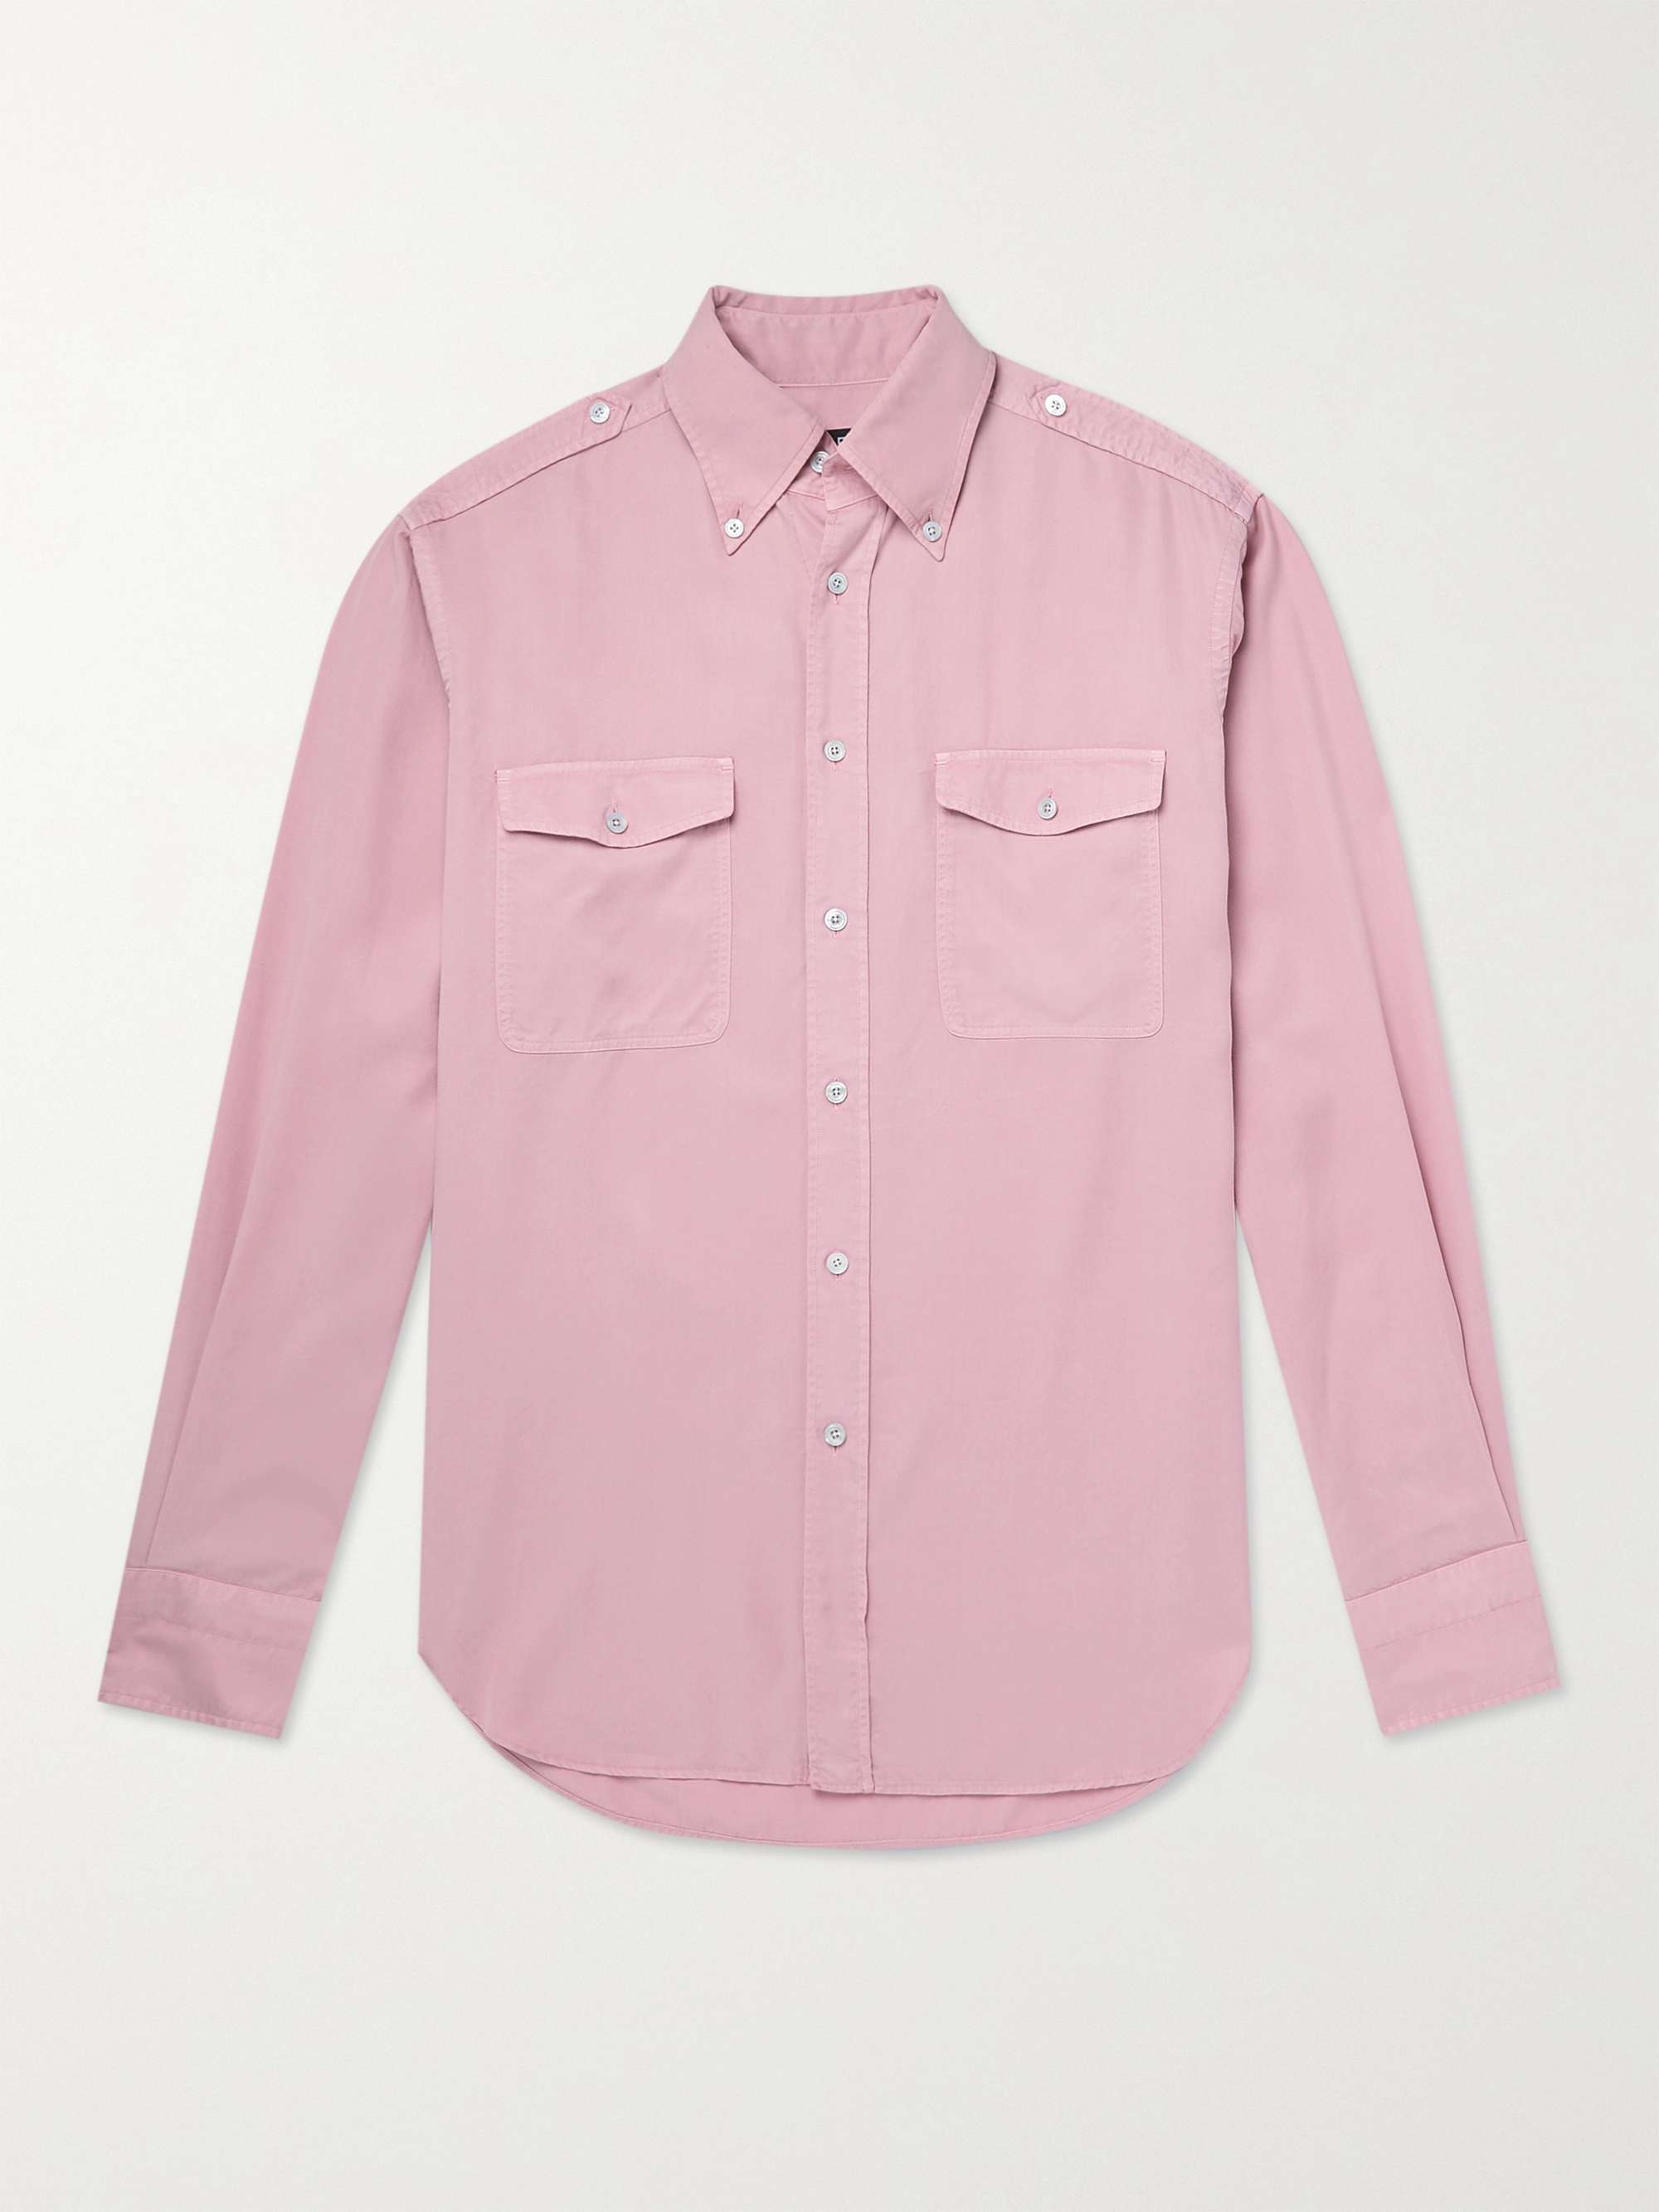 TOM FORD Button-Down Collar Lyocell Shirt